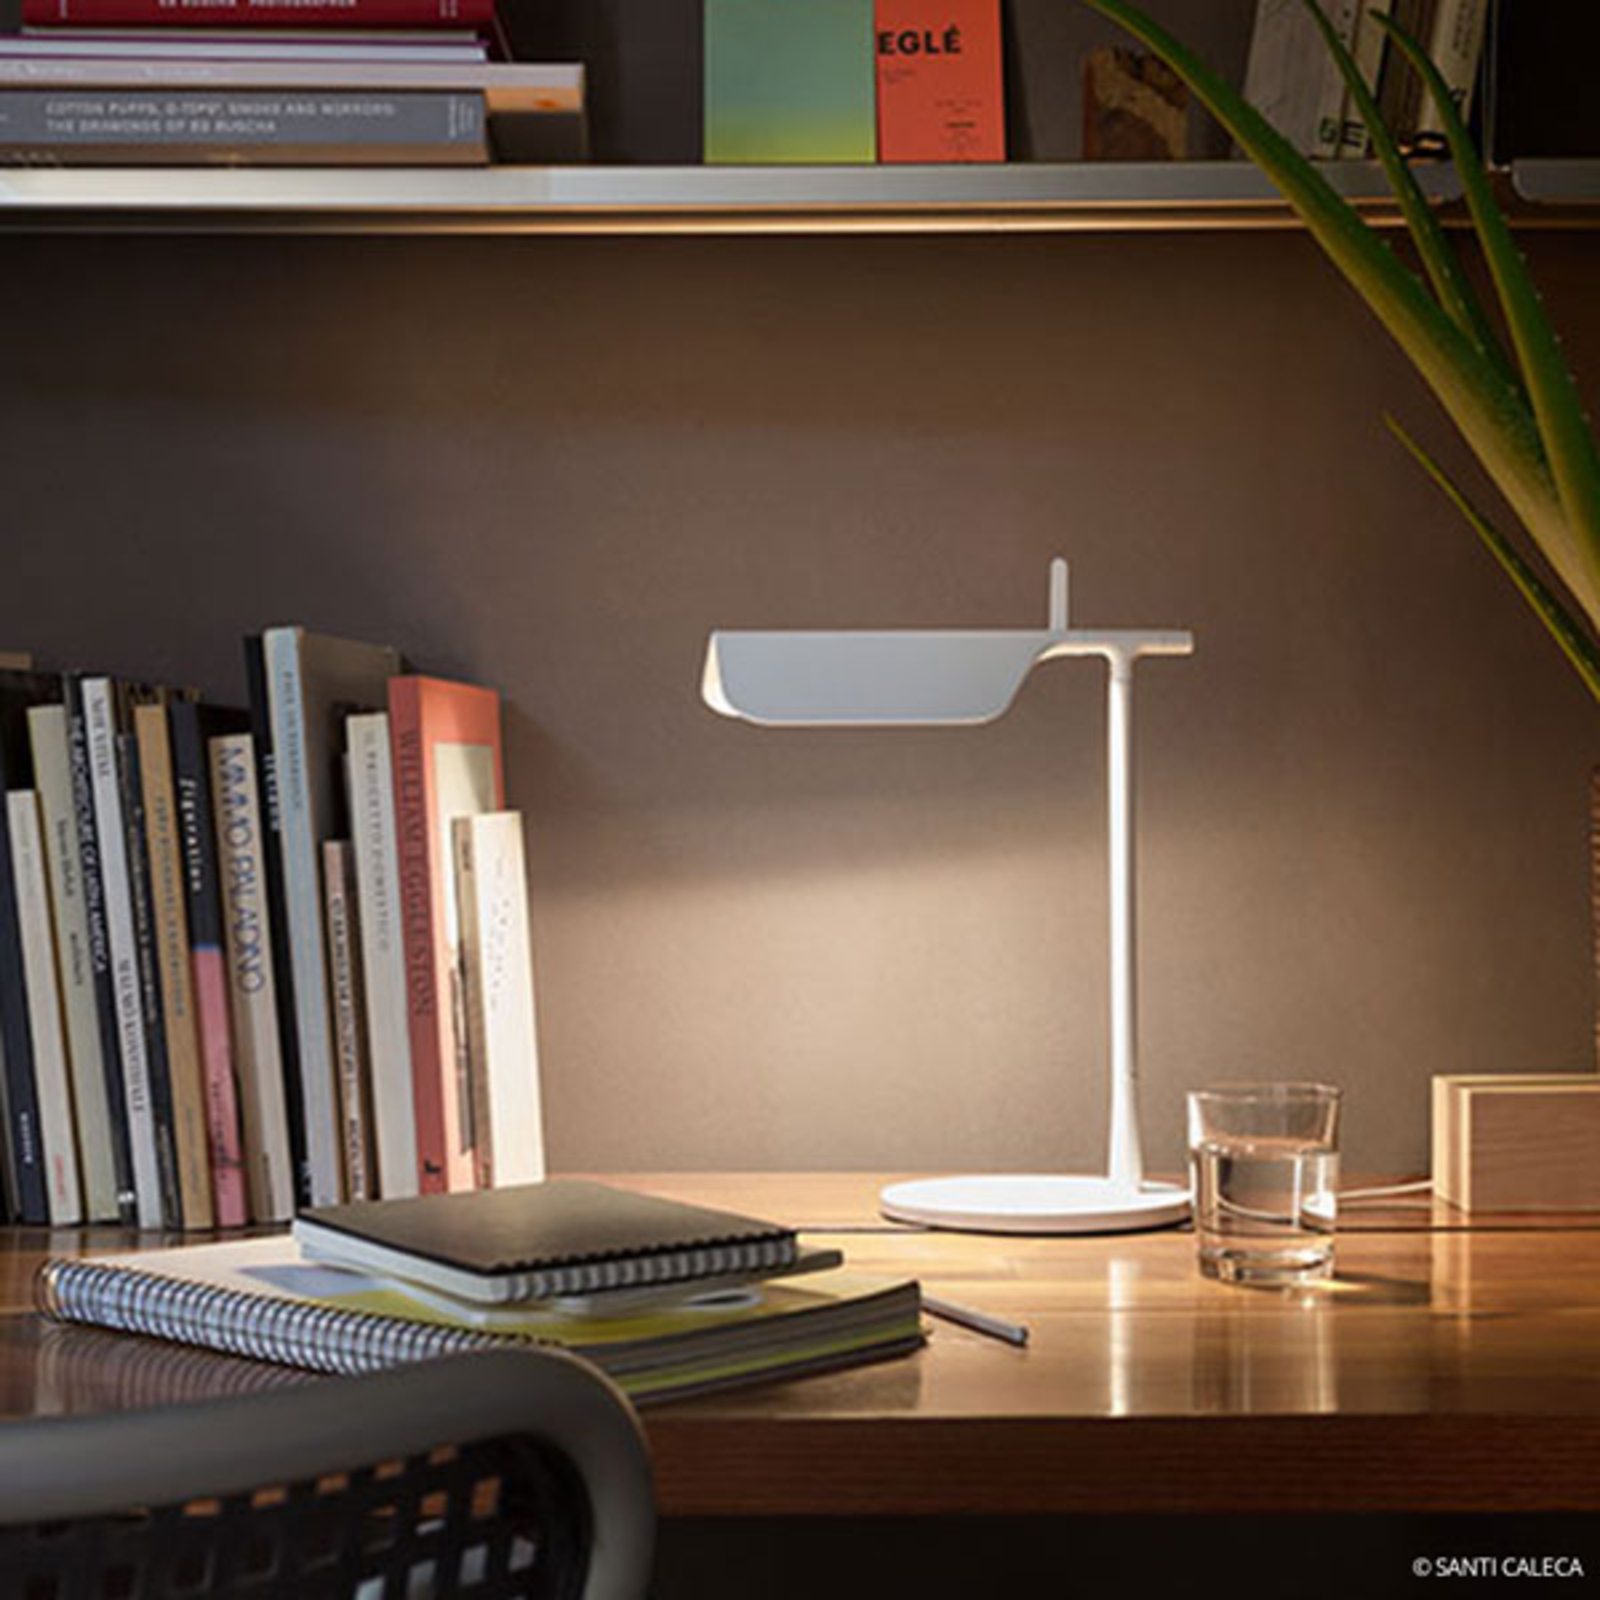 FLOS Tab LED table lamp, white